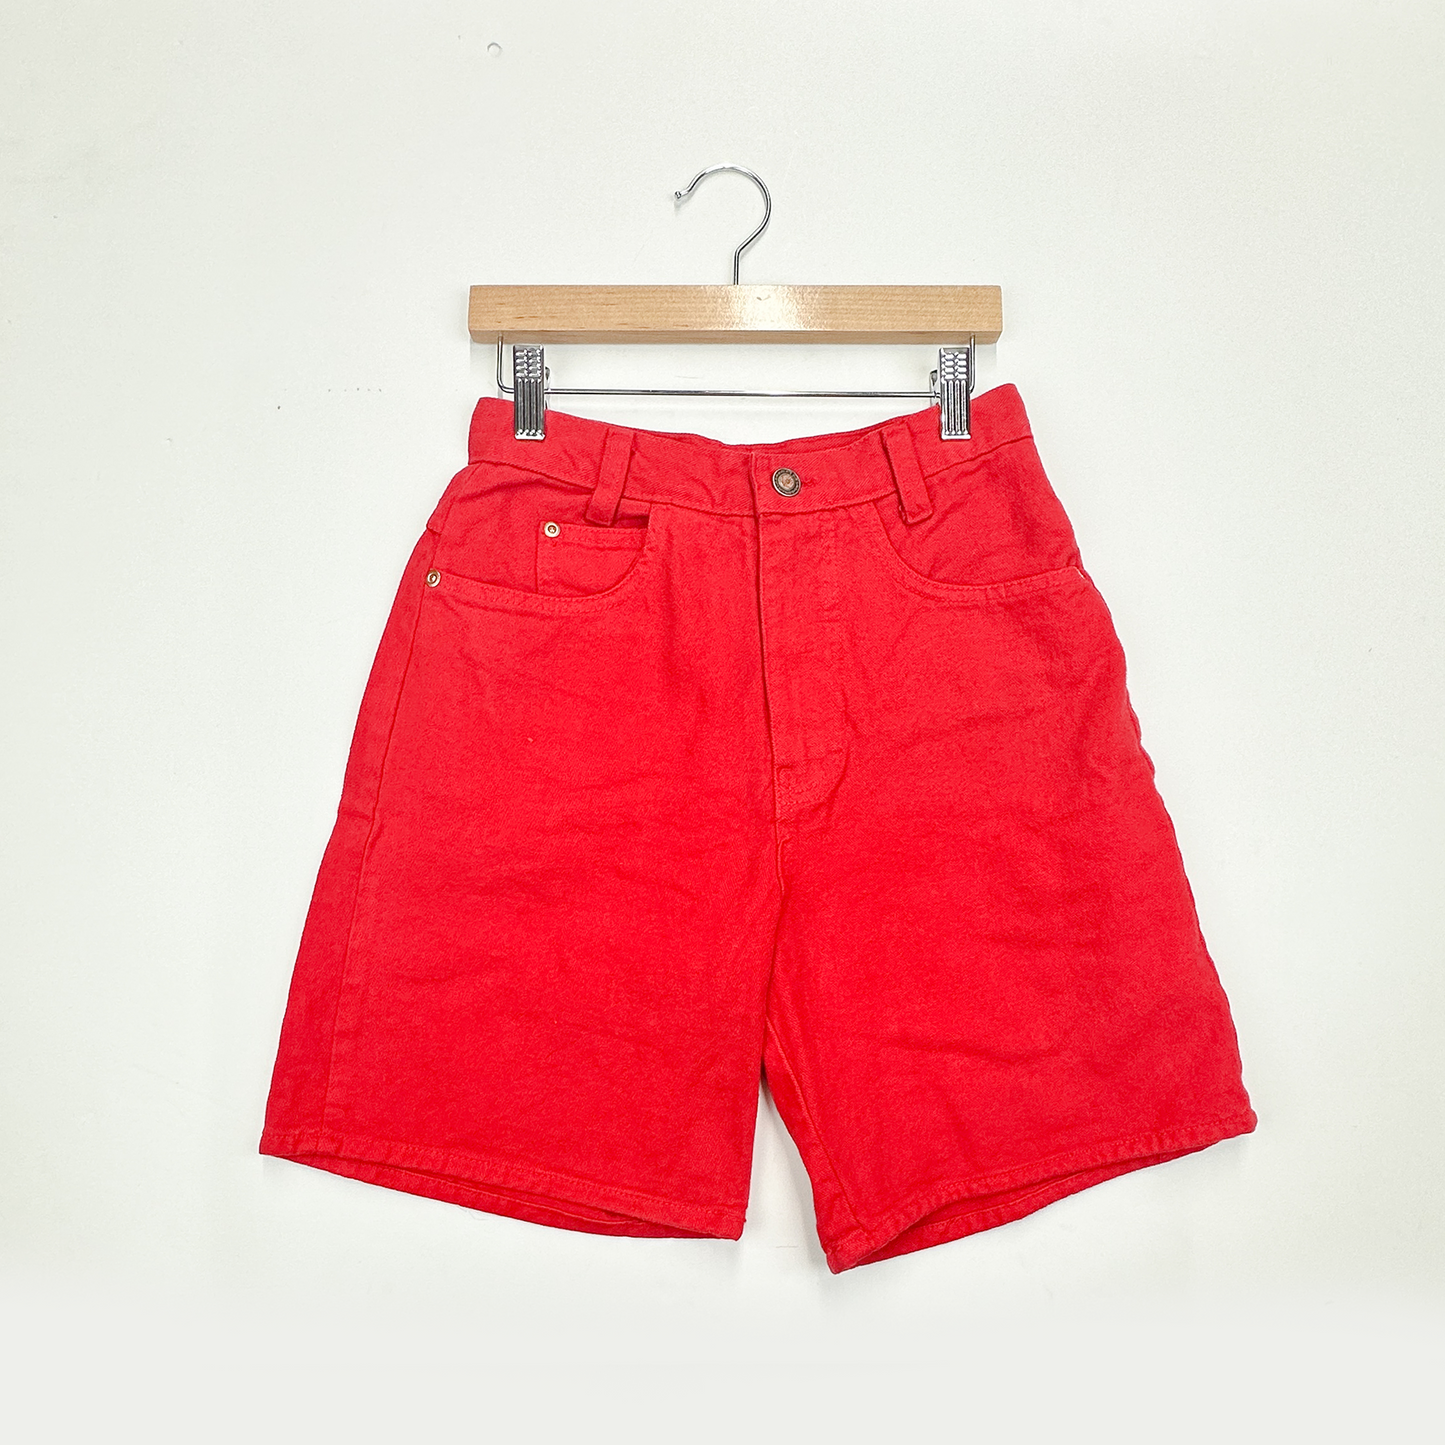 Vintage Red Denim Shorts - Size 14-16yr